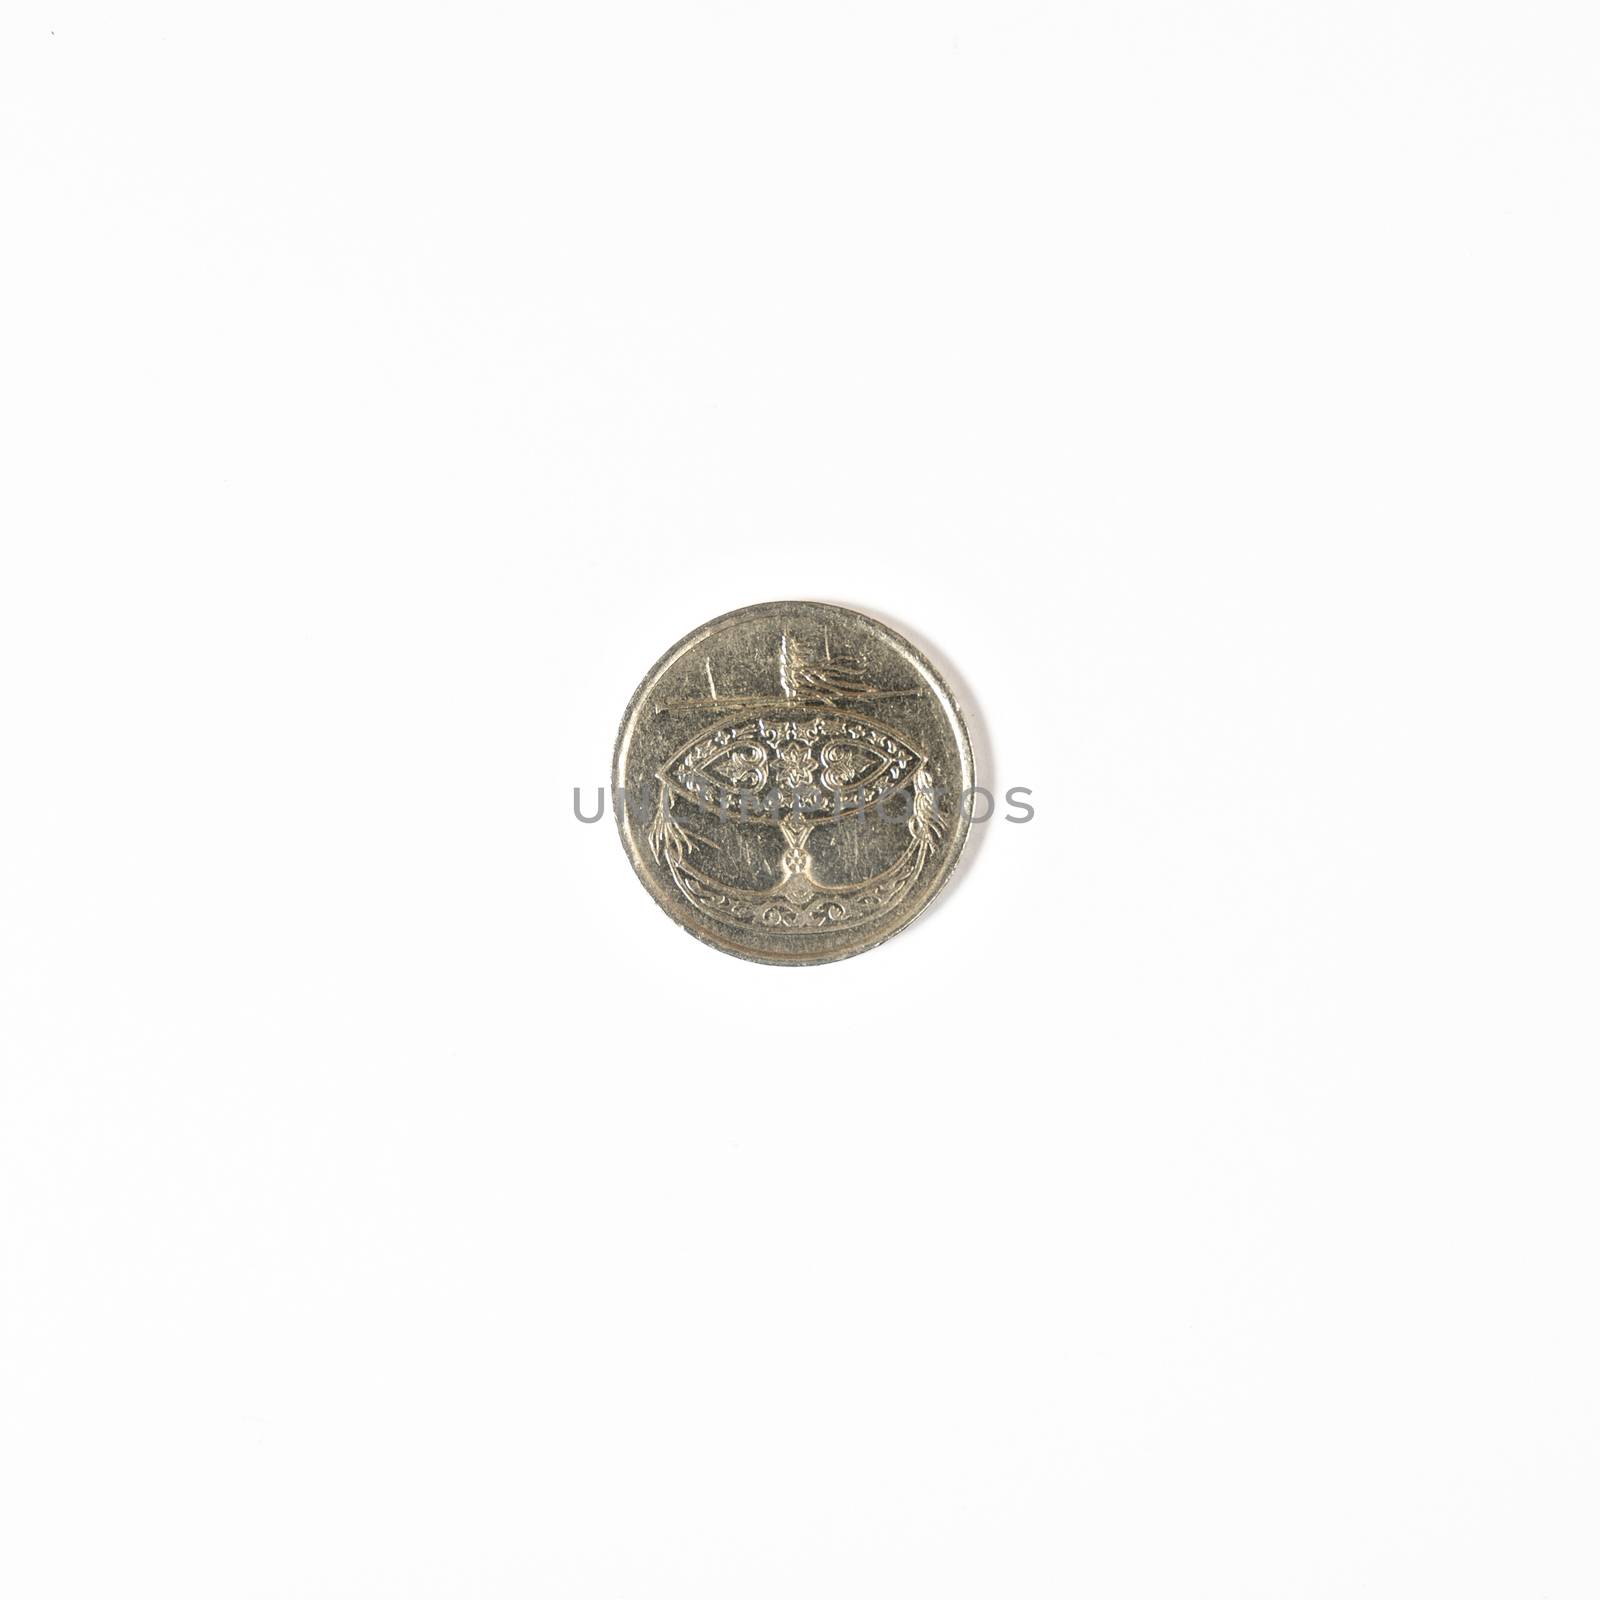 A 50 Sen coin of Malaysian Ringgit